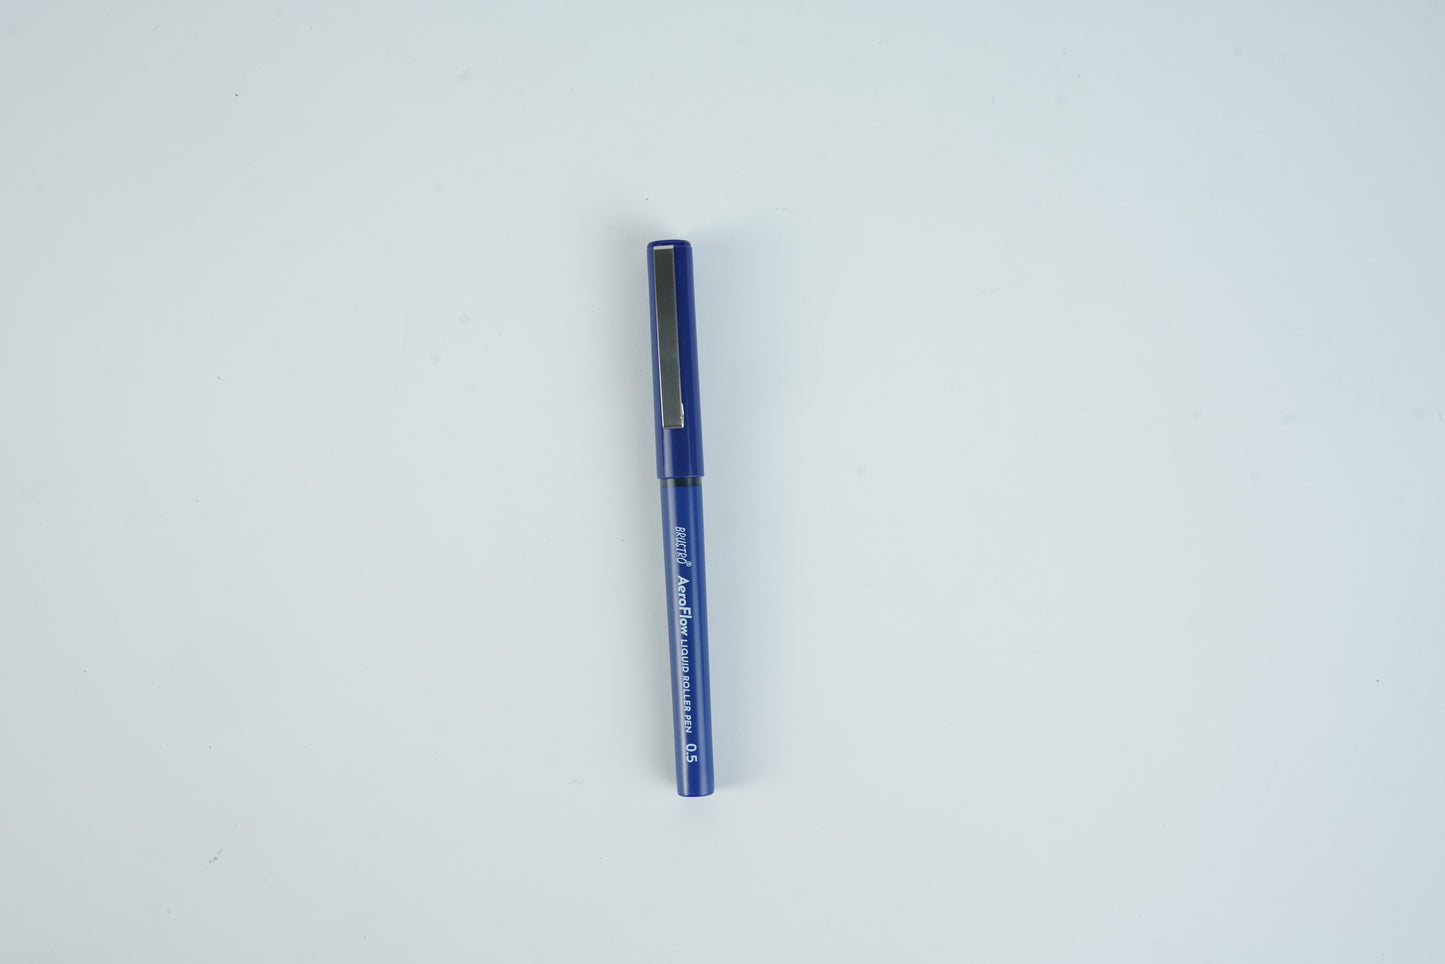 BRUSTRO AeroFlow Liquid Ink Rollerball Pens 0.5 Micro Tip Pack of 3 (Blue ink)